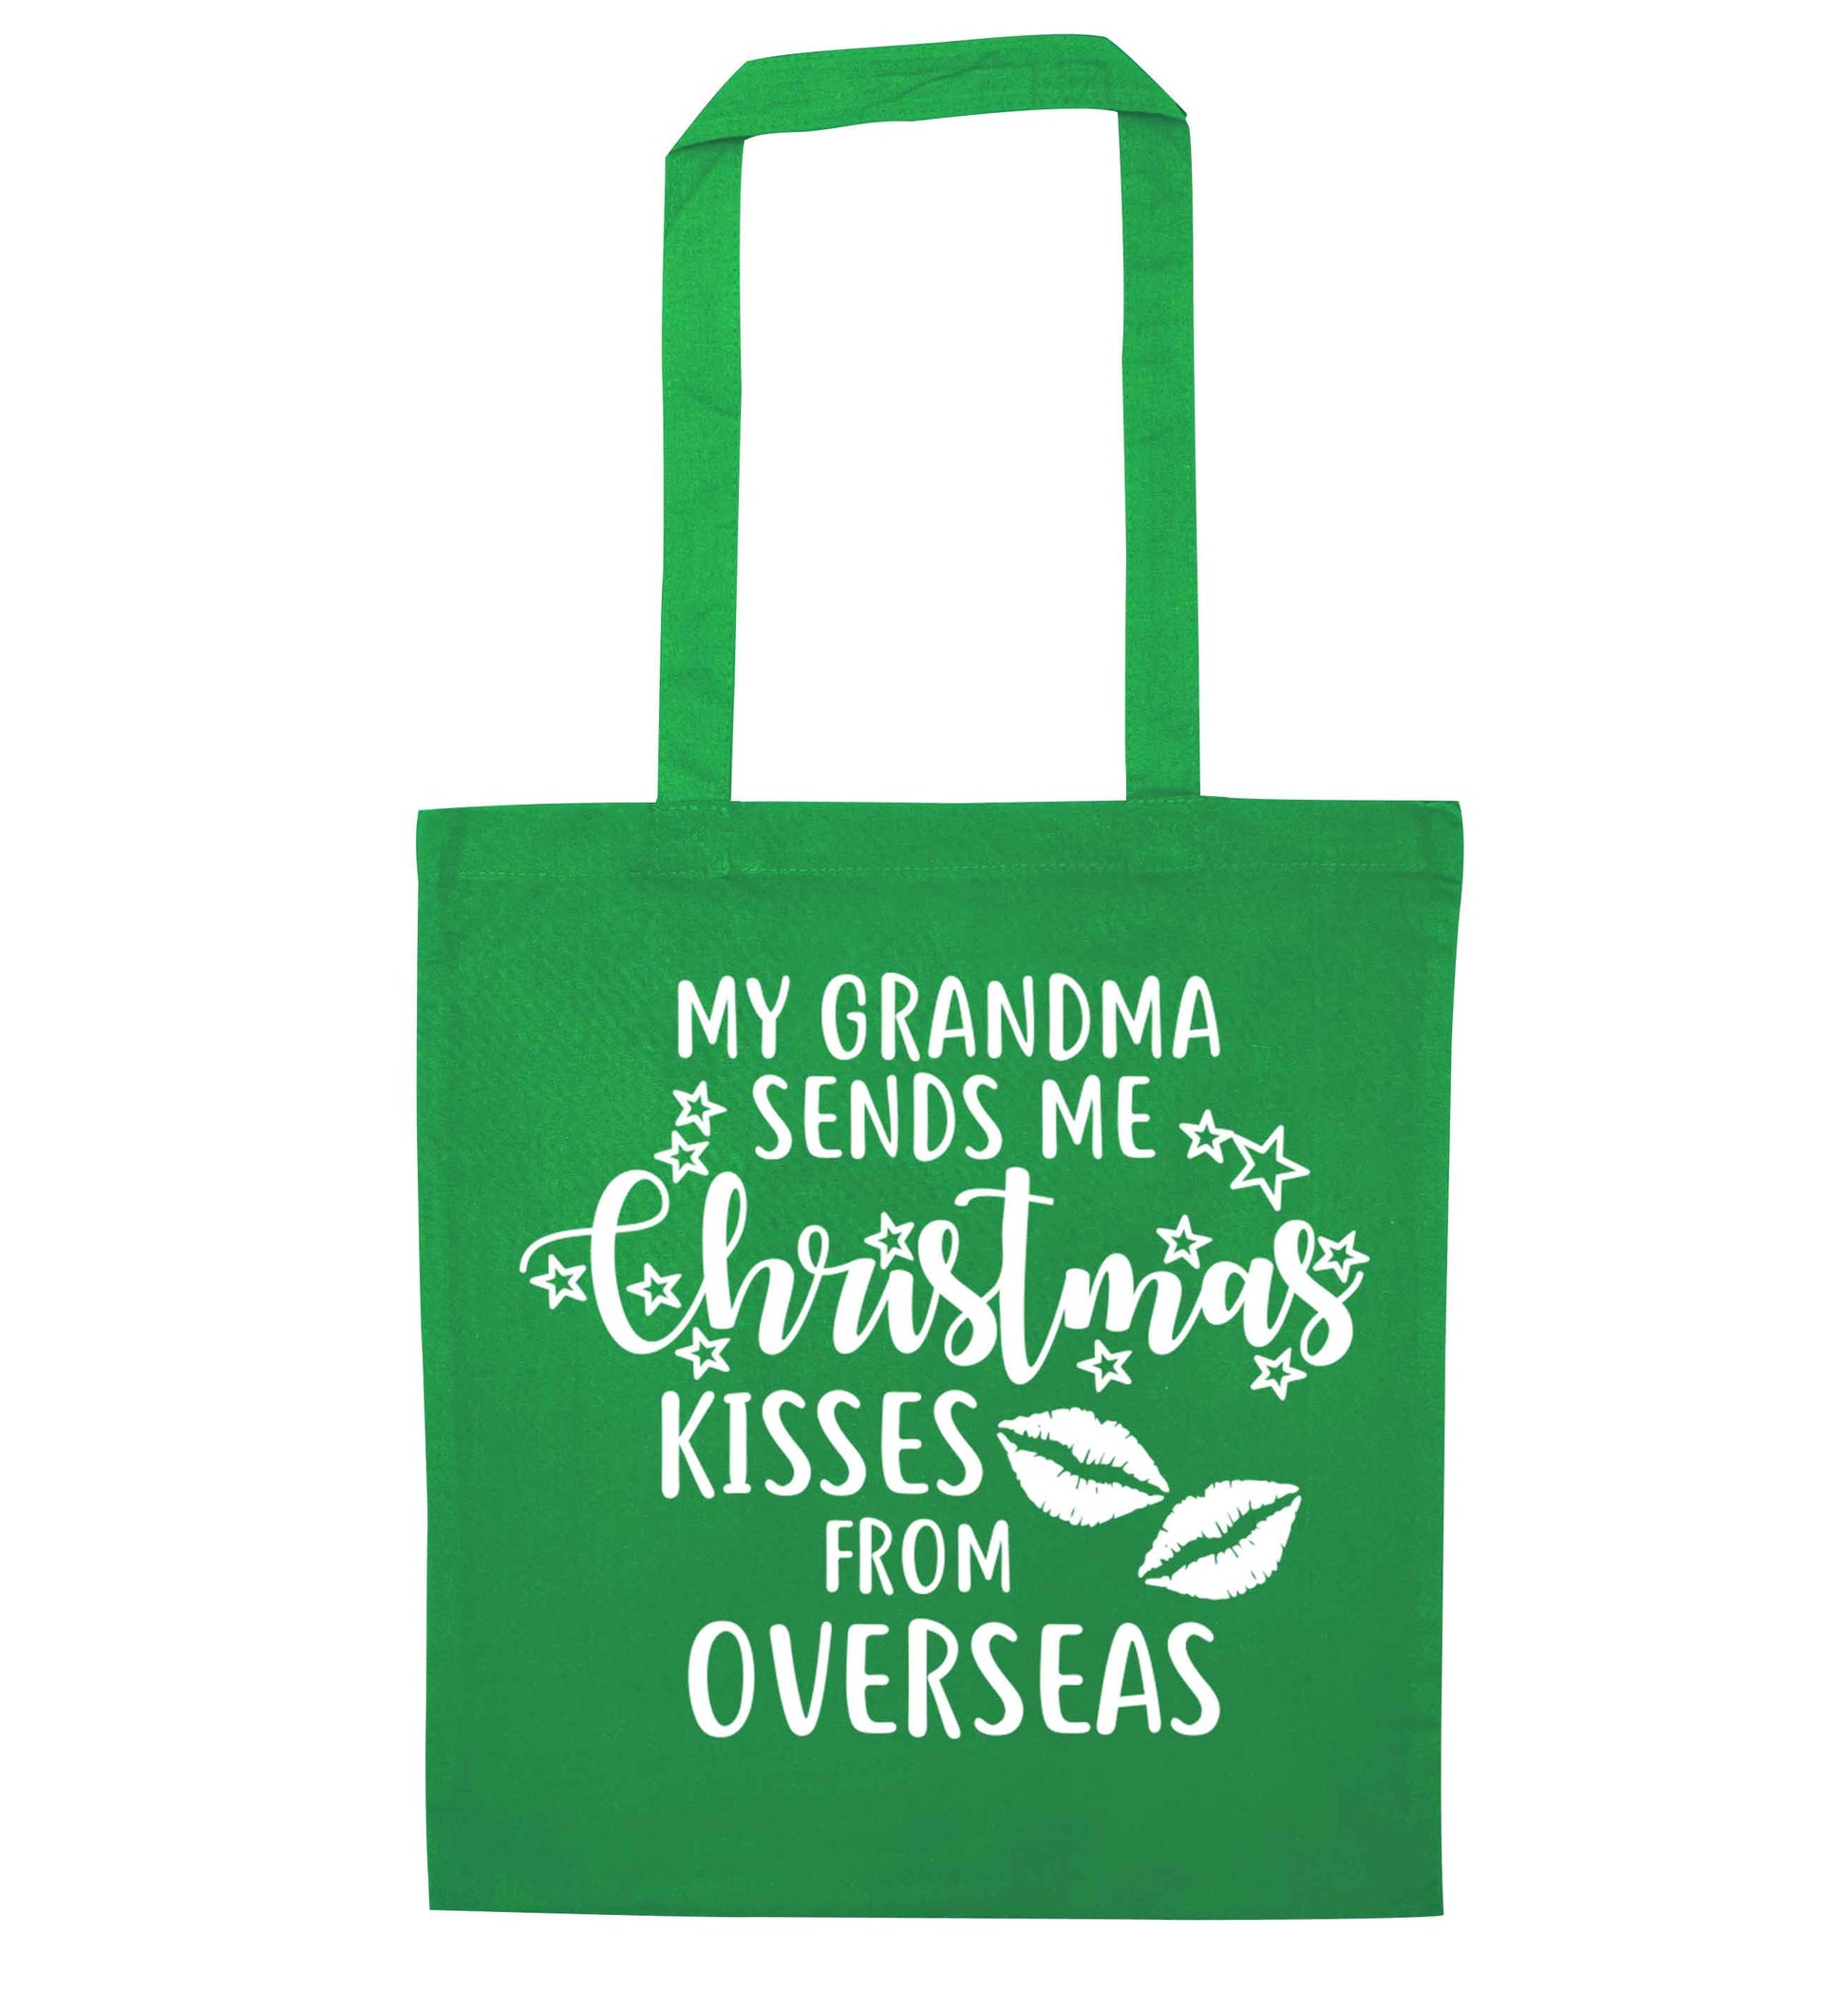 Grandma Christmas Kisses Overseas green tote bag